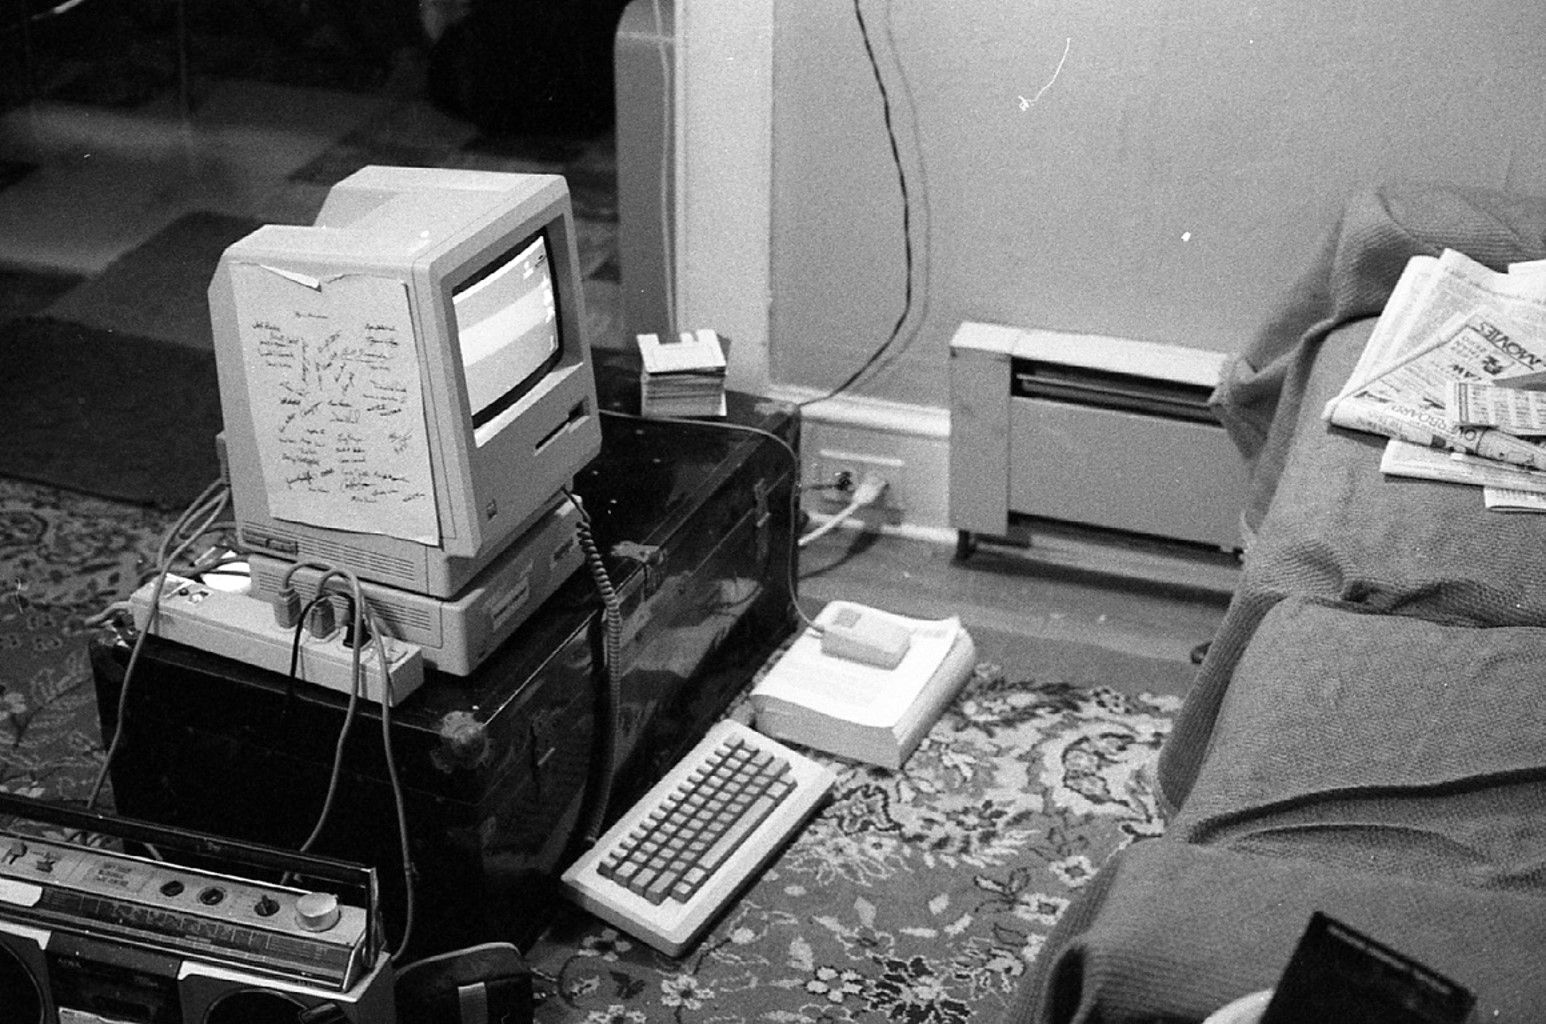 Image of Original Macintosh Computer